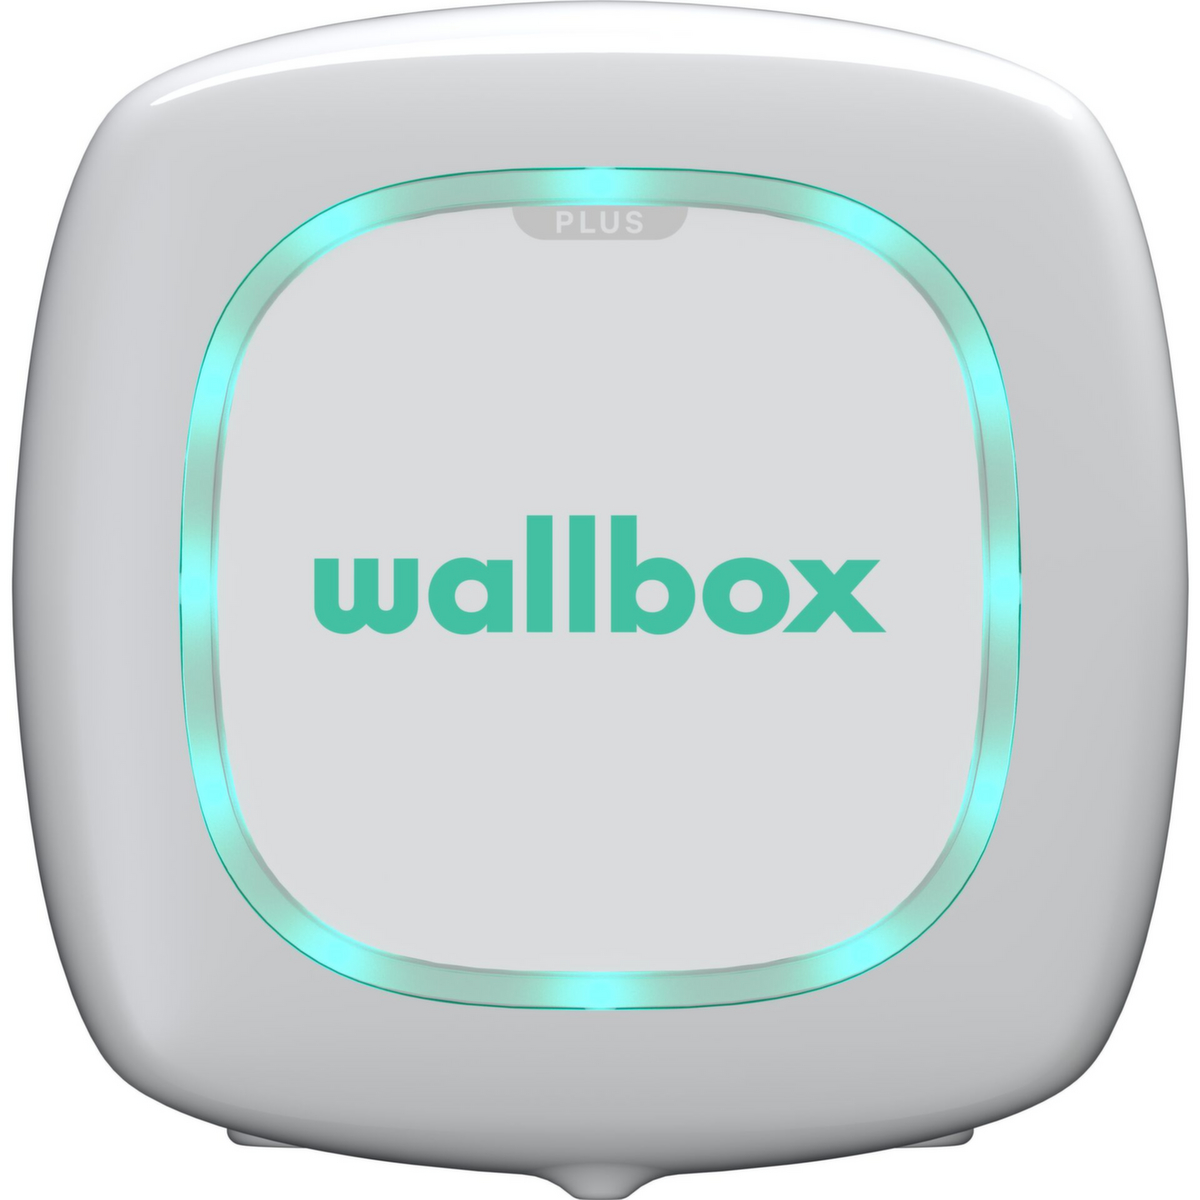 Wallbox compacte e-auto-laadstation Pulsar Plus, type 2 (IEC 62196-2)